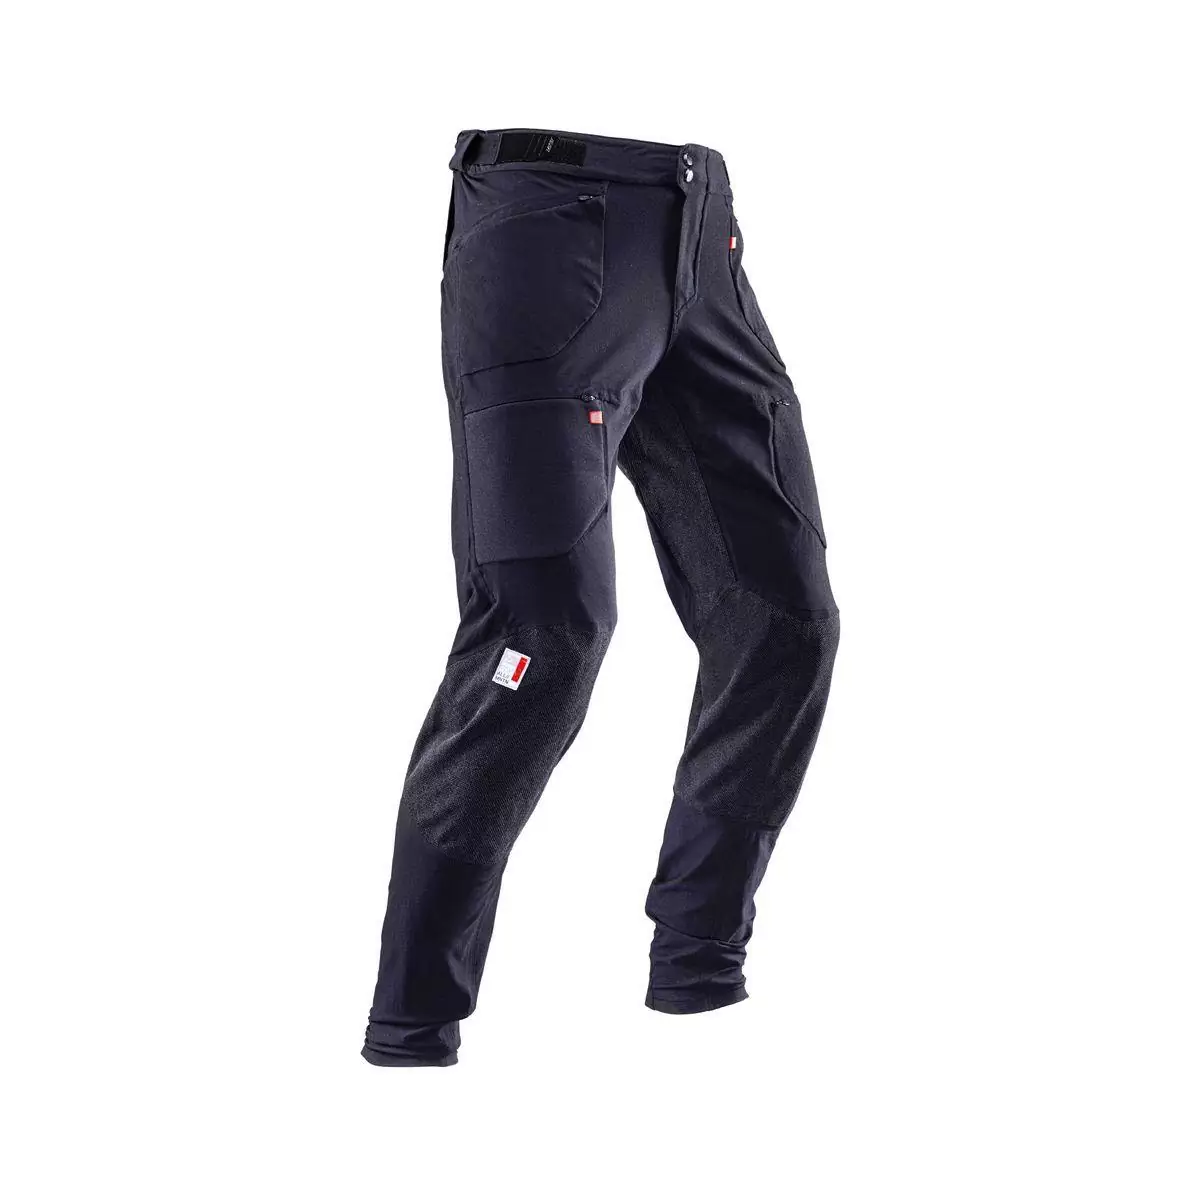 Allmtn 4.0 Long MTB Pants Black Size XS #2